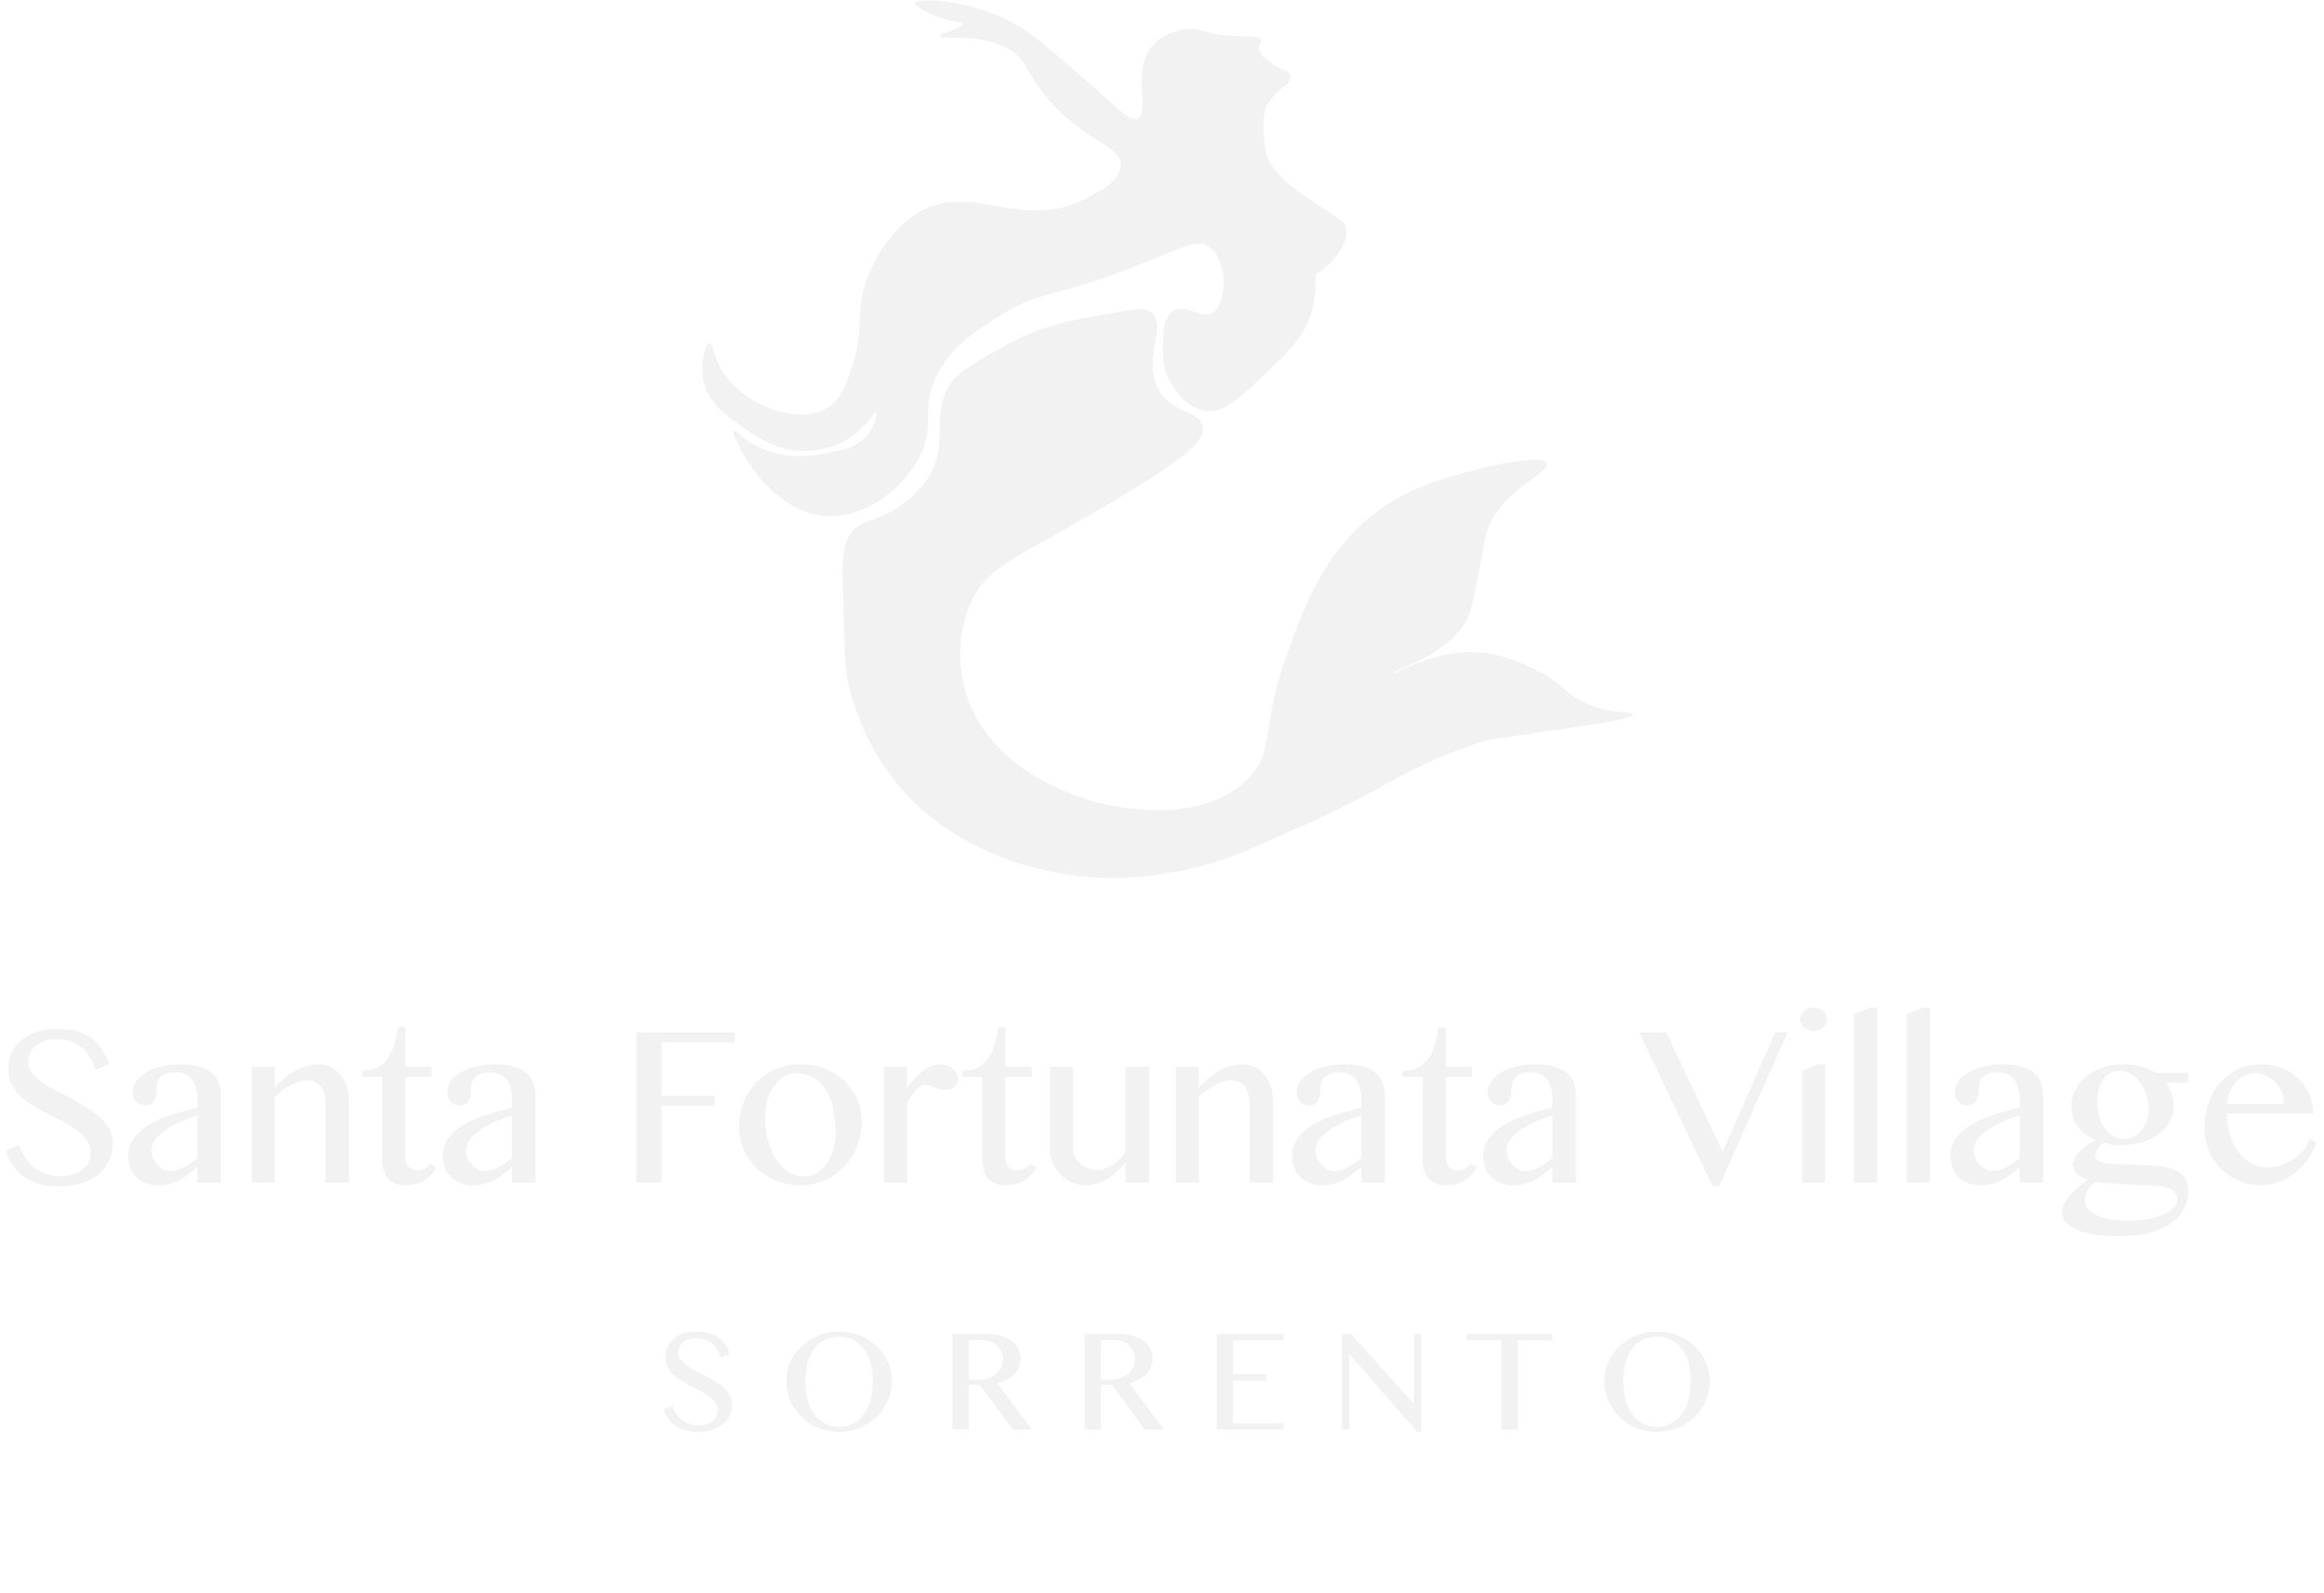 Santa Fortunata